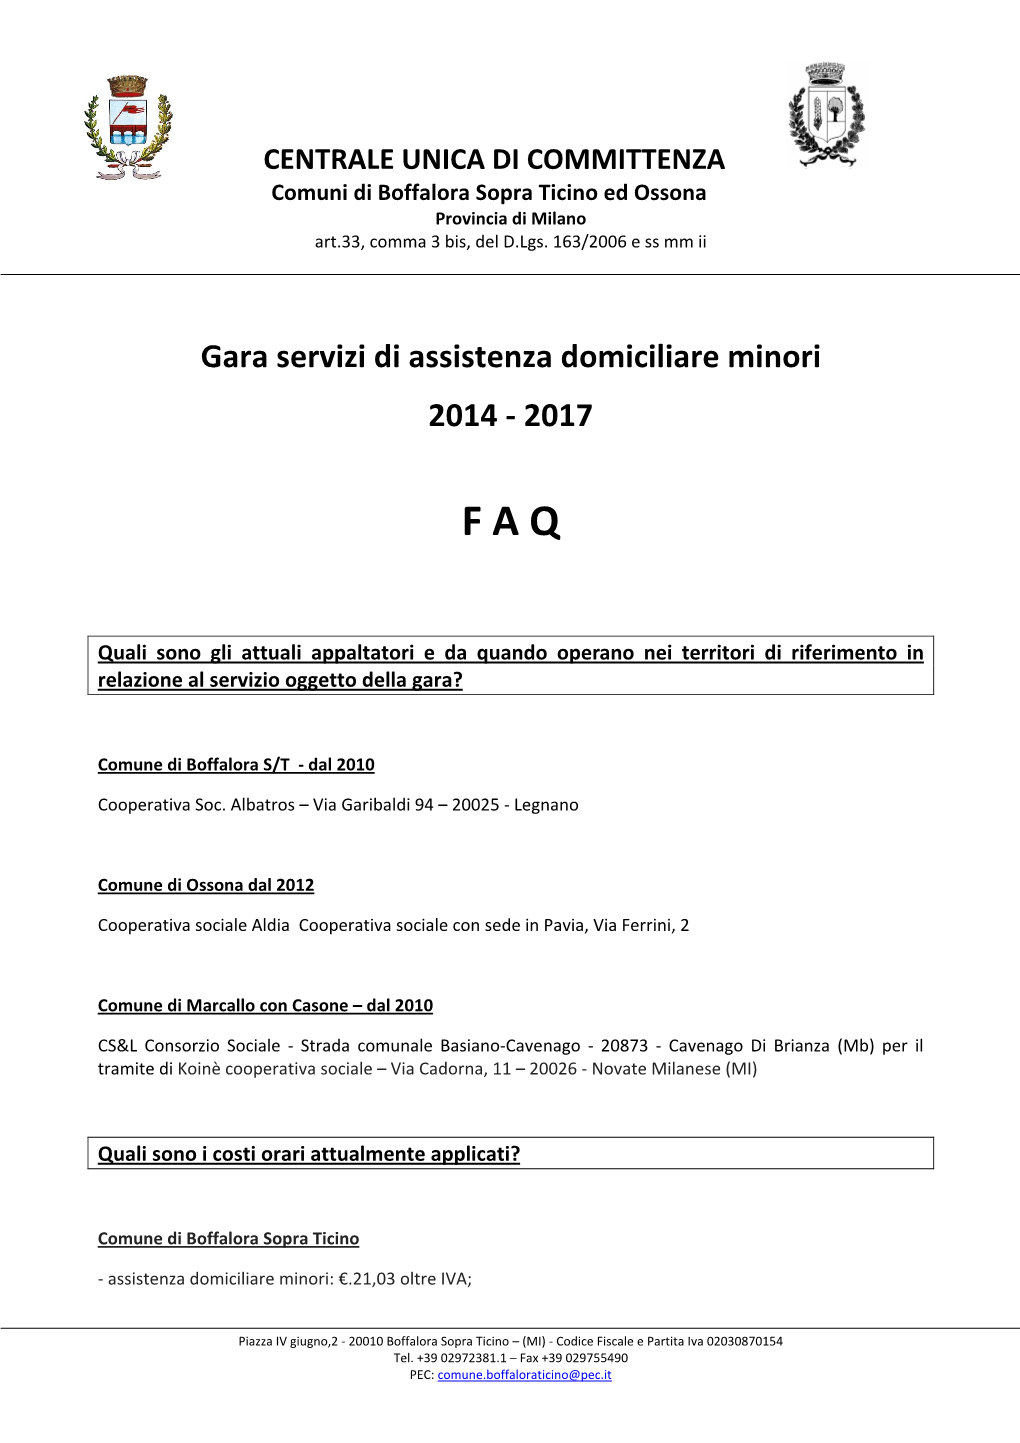 FAQ Gara Servizi ADM 2014 2017